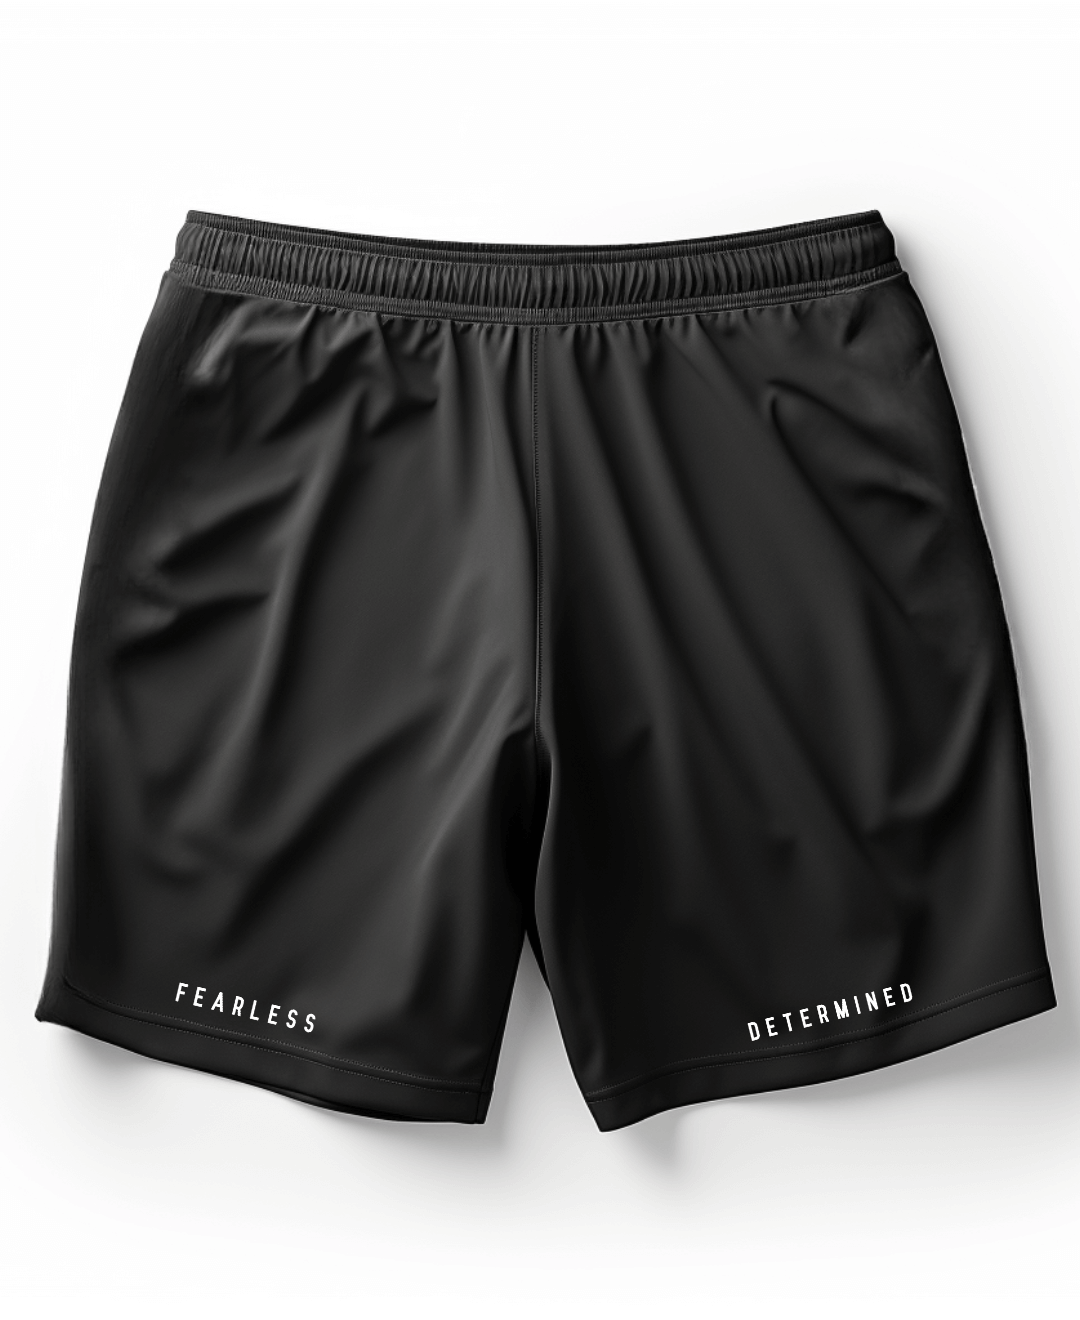 A Conqueror's Mesh Shorts - DauntlessEagle